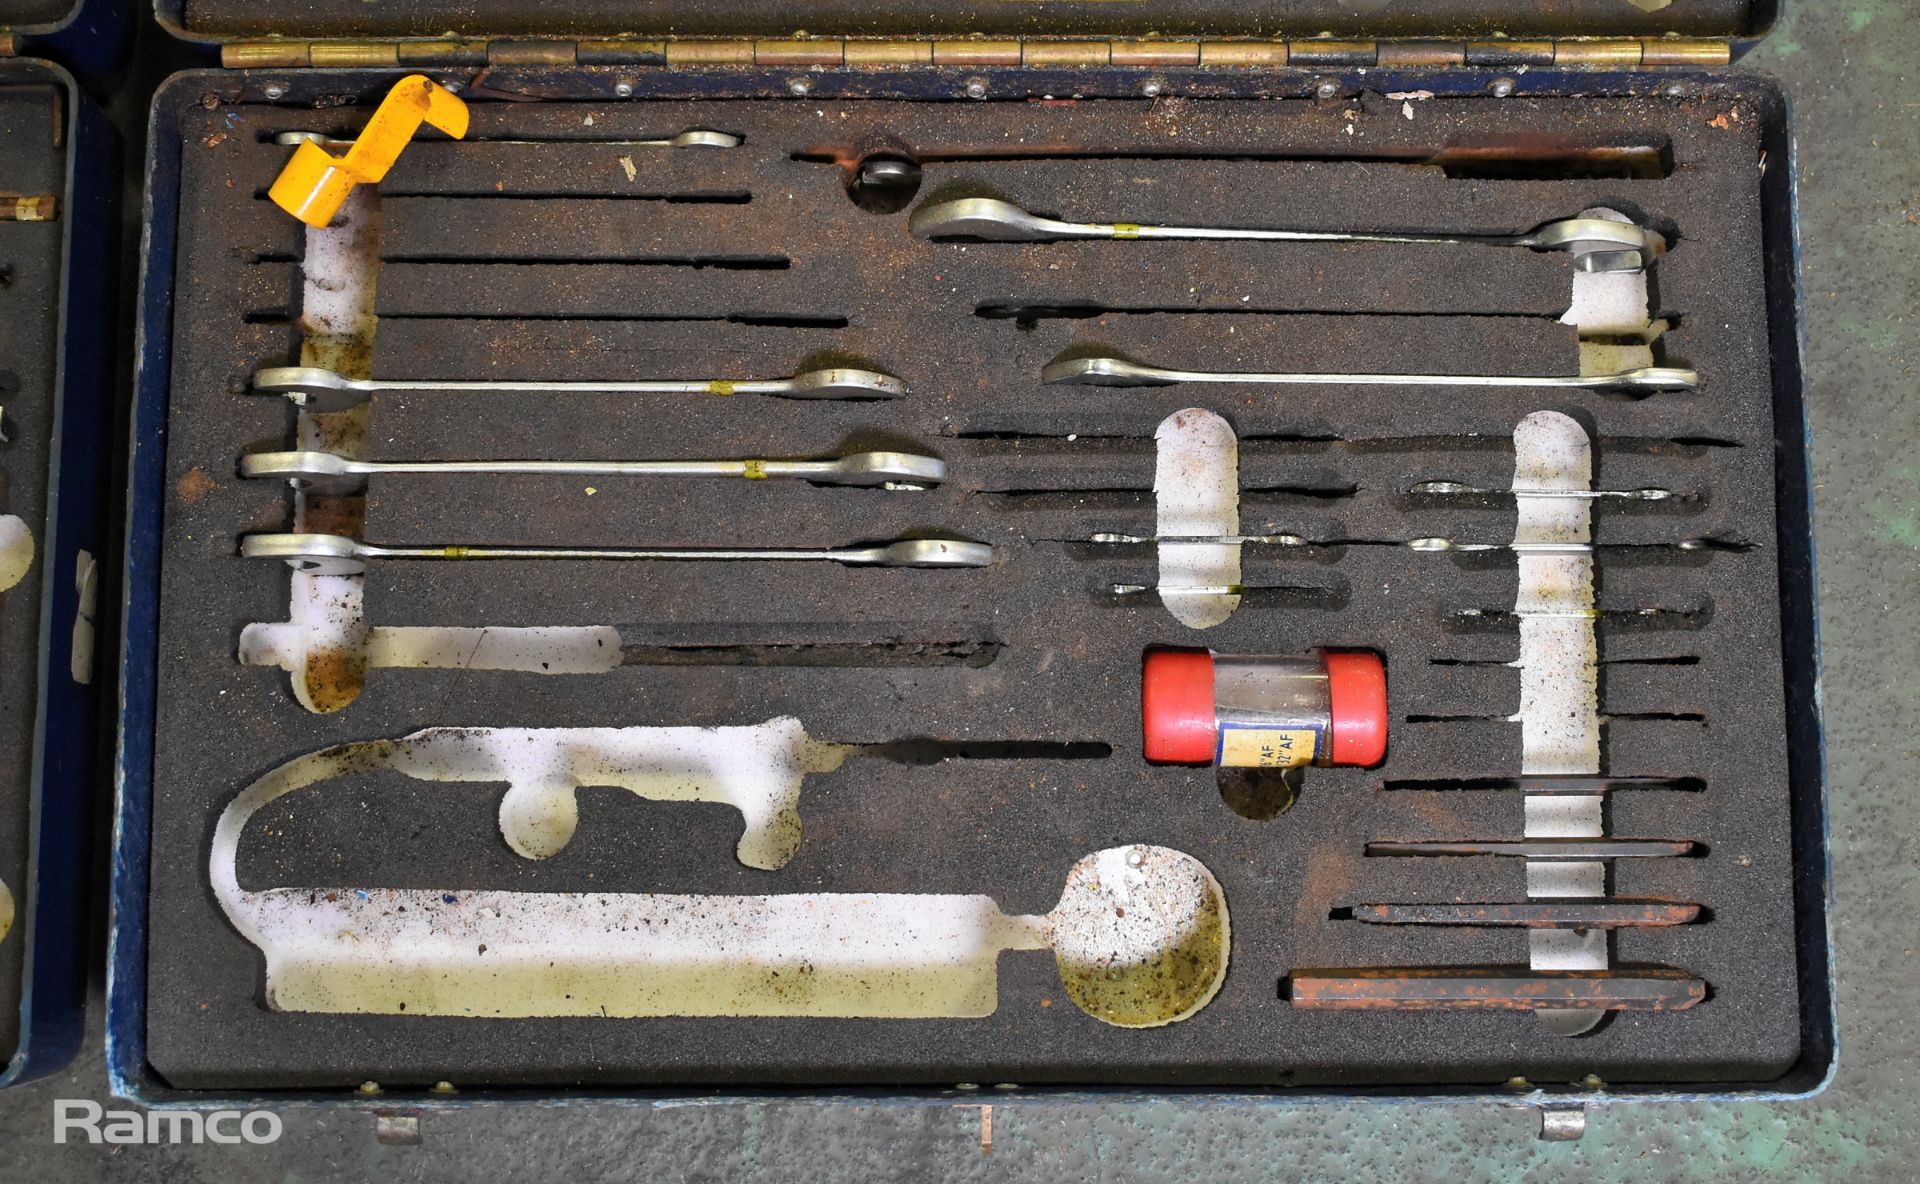 2x Multi piece tool kits in composite case - spanners, screwdrivers, allen keys, pliers - Bild 3 aus 5